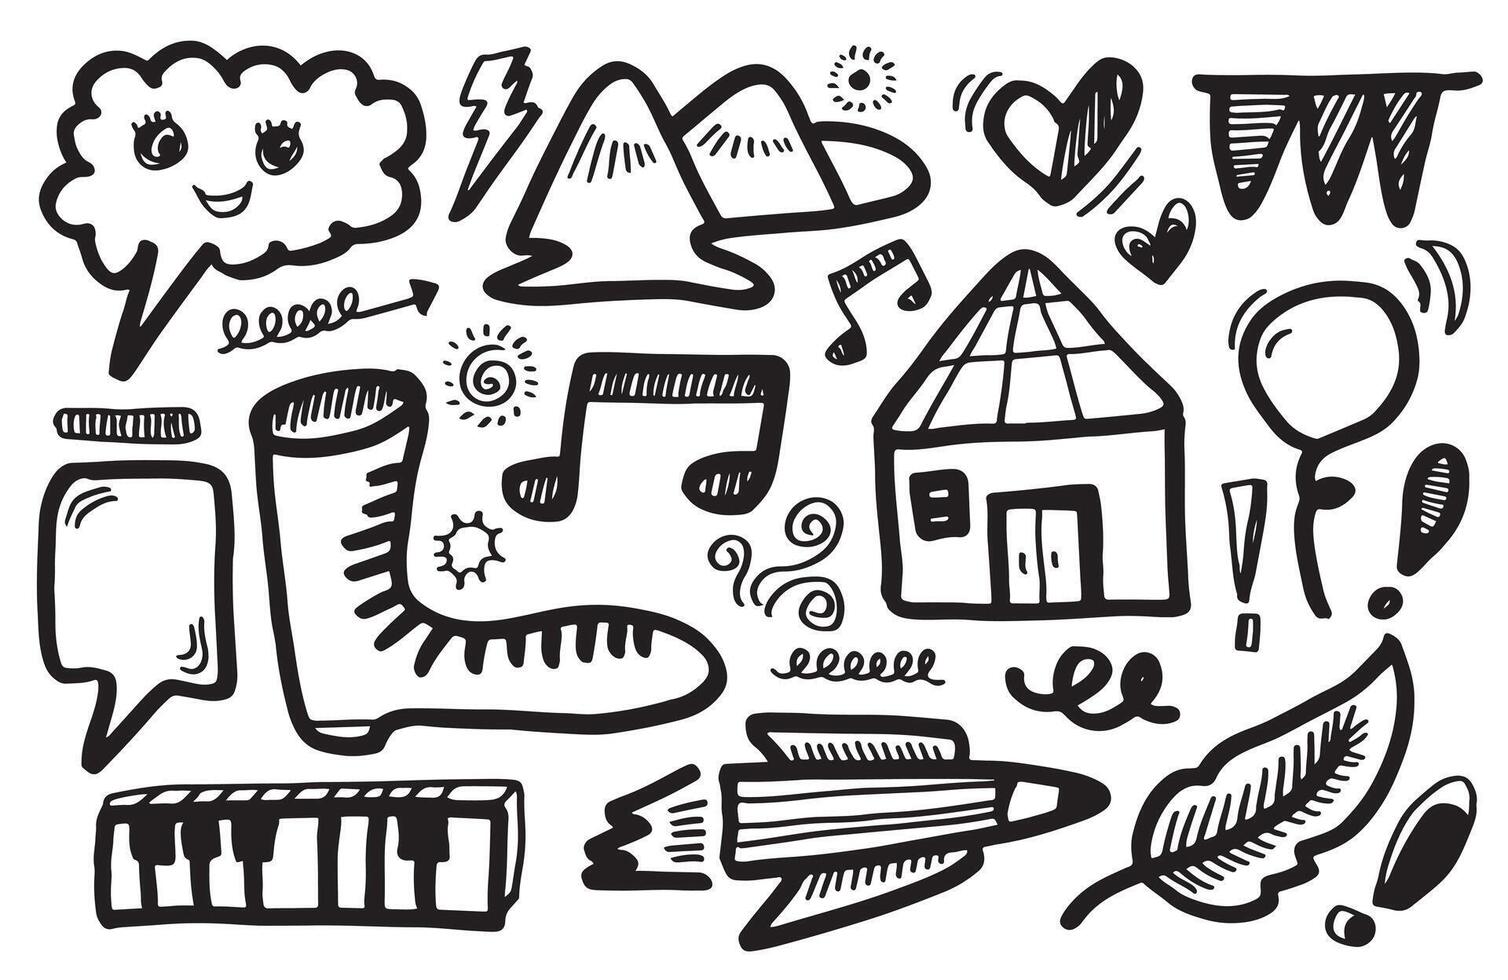 Hand drawn doodle design elements.thunderbolt, cloud, Arrow, heart, shoe, hill, house. vector